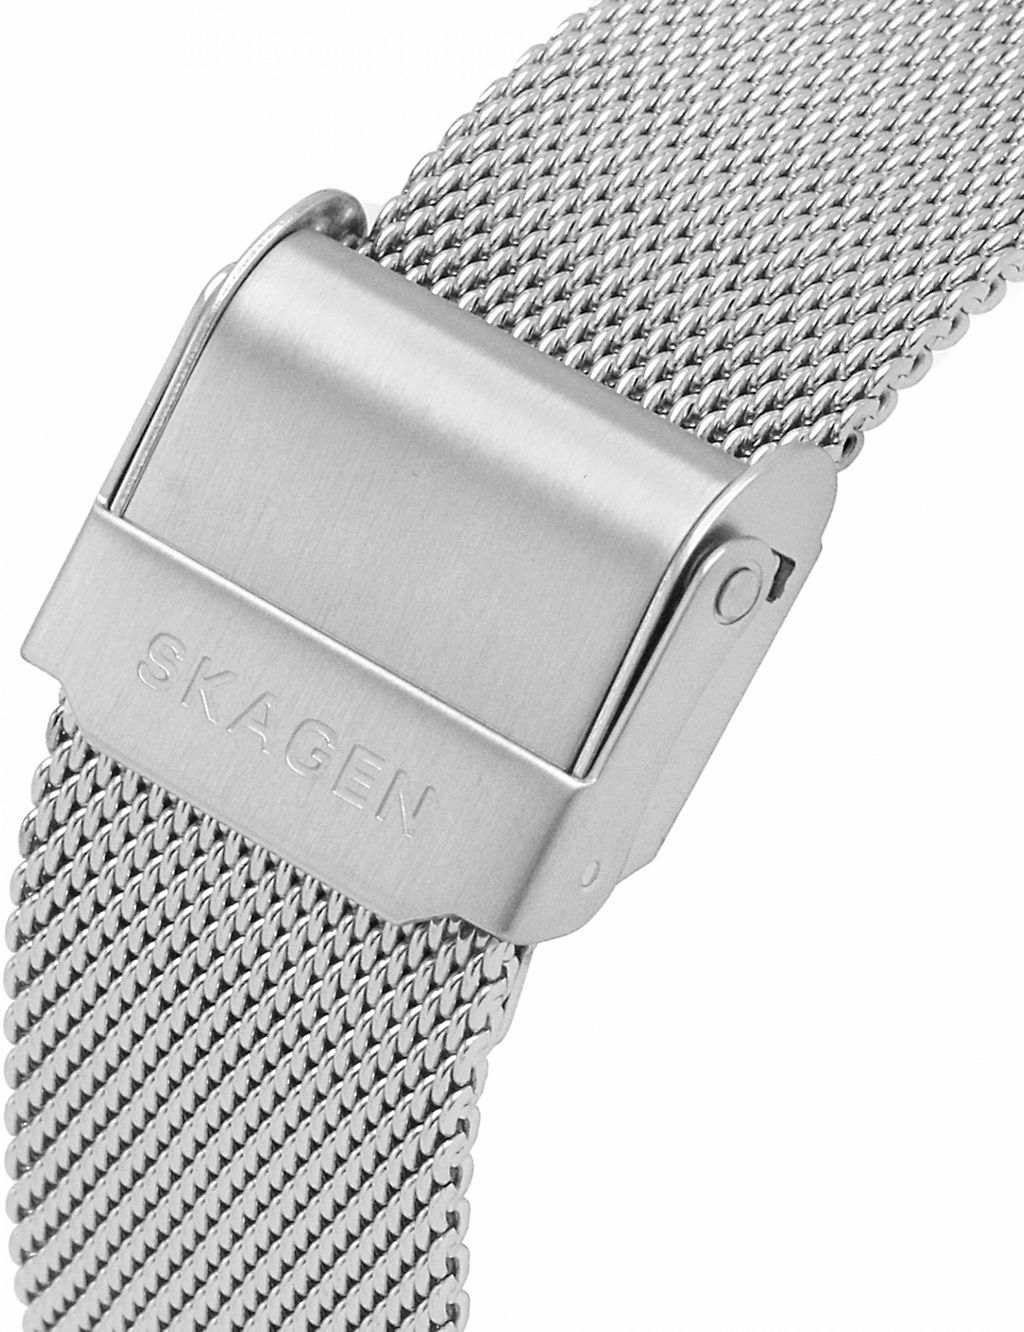 Skagen Signatur Classic Mesh Stainless Steel Watch 5 of 8